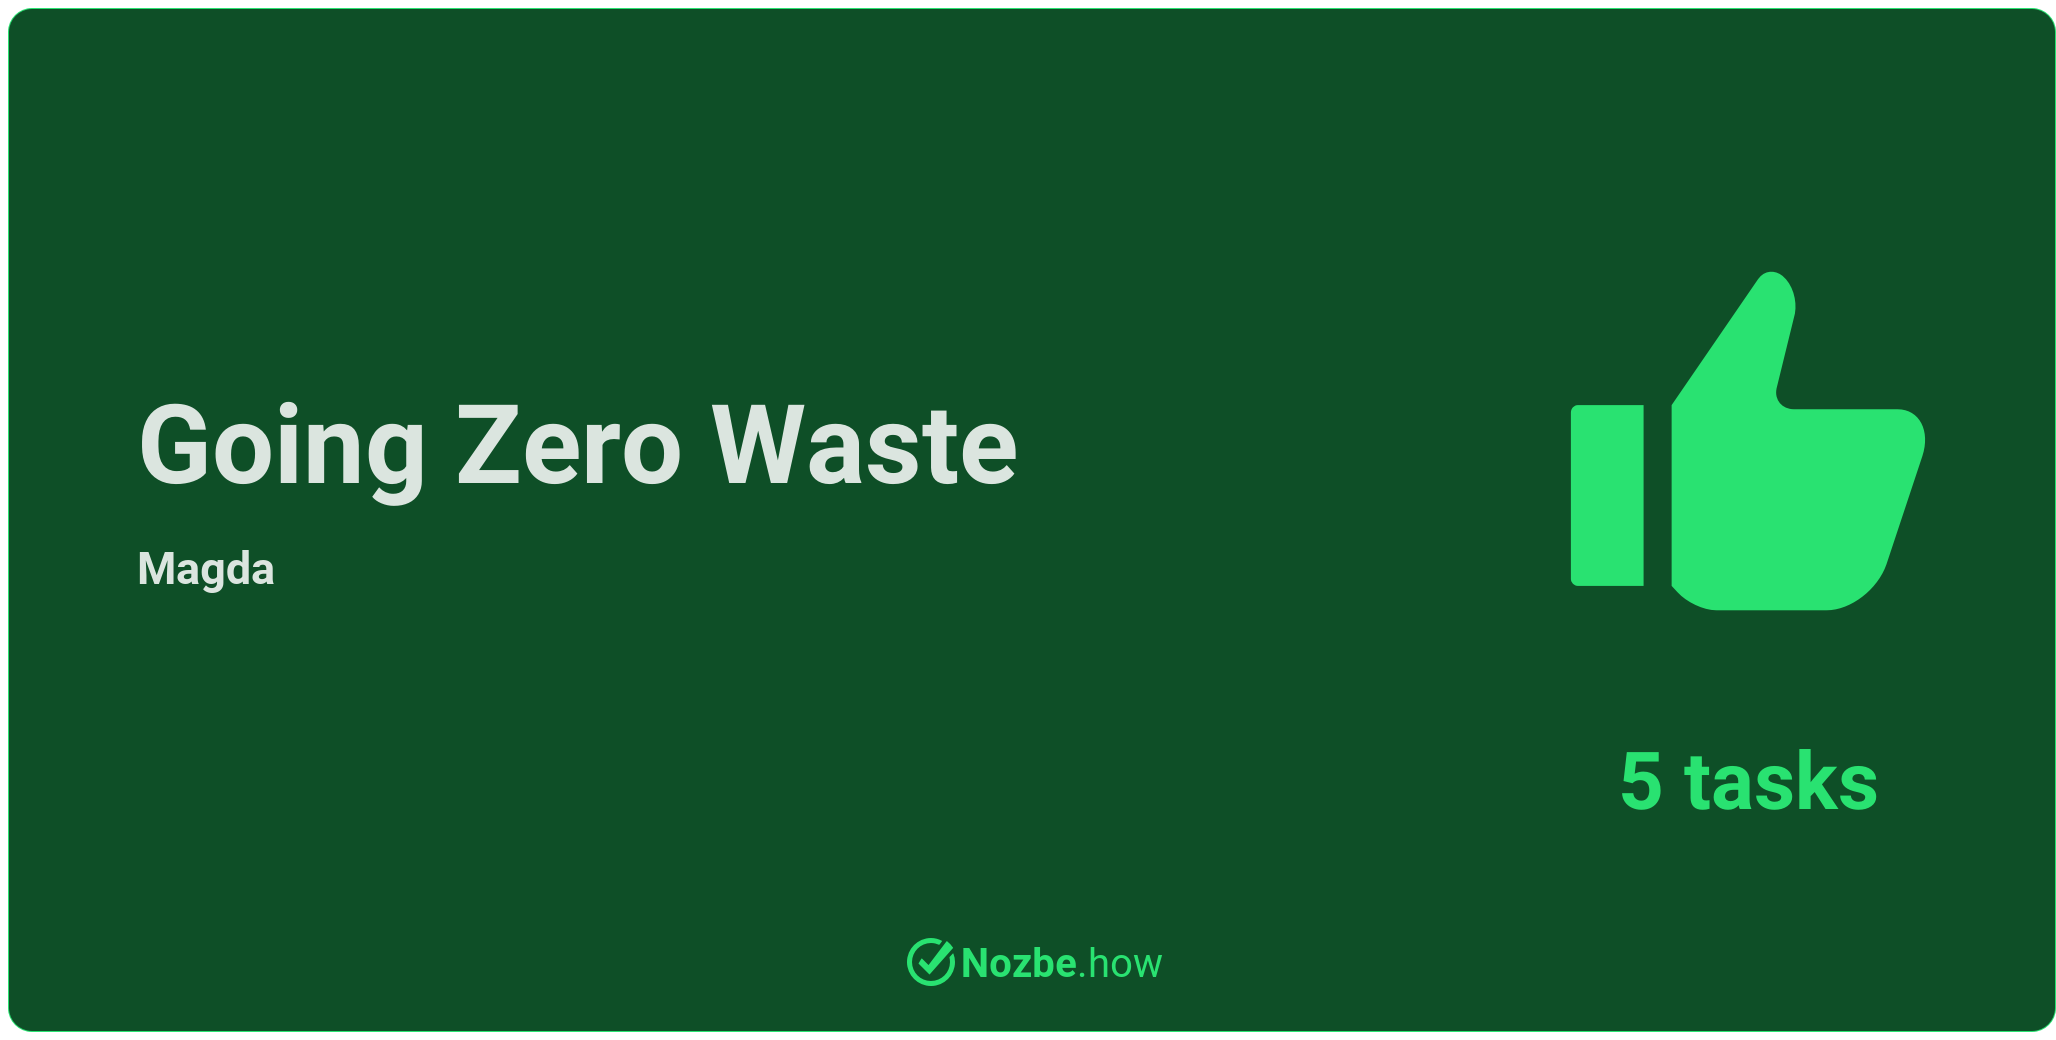 Go zero waste